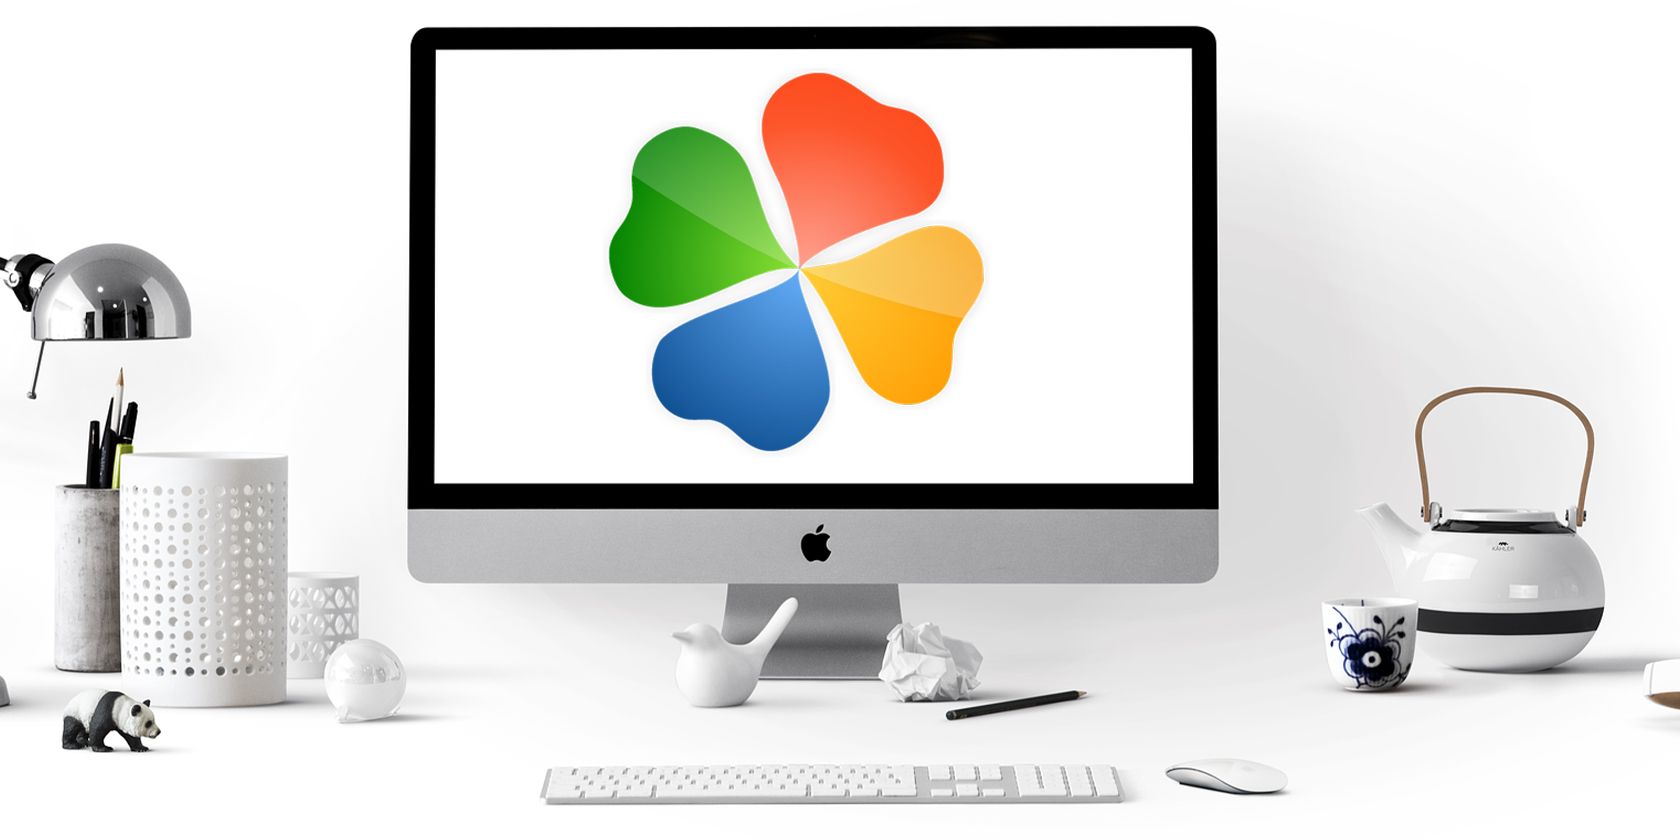 PlayOnMac Logo on iMac Screen